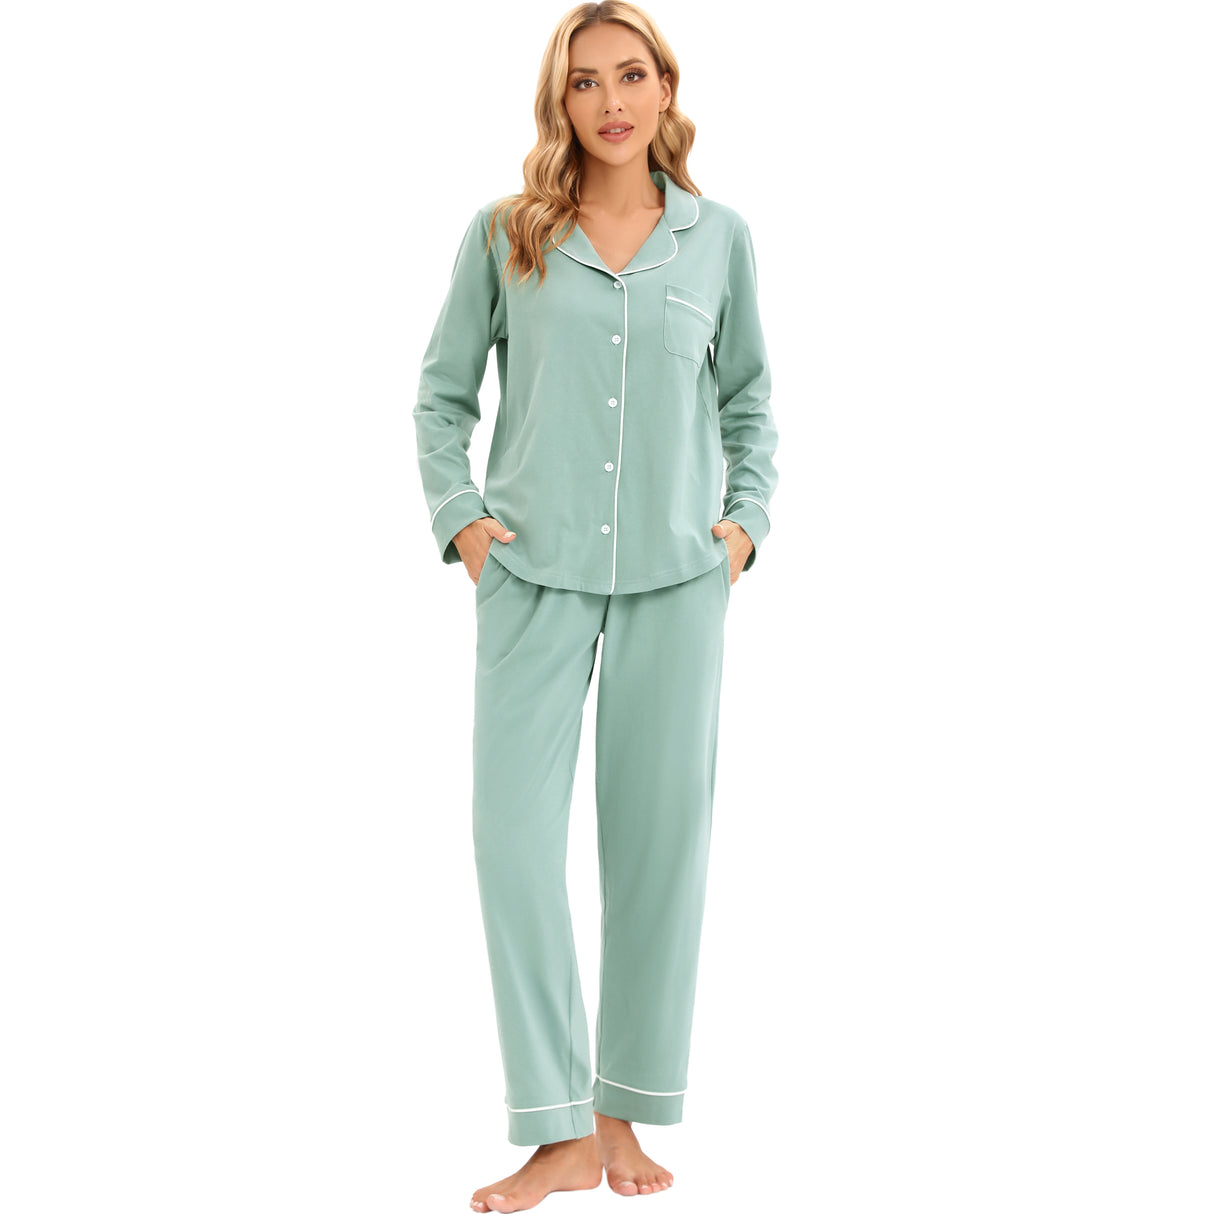 LUBOT Women’s Pajamas Two-piece PJ Set Cotton Lounge Set Long Sleeve